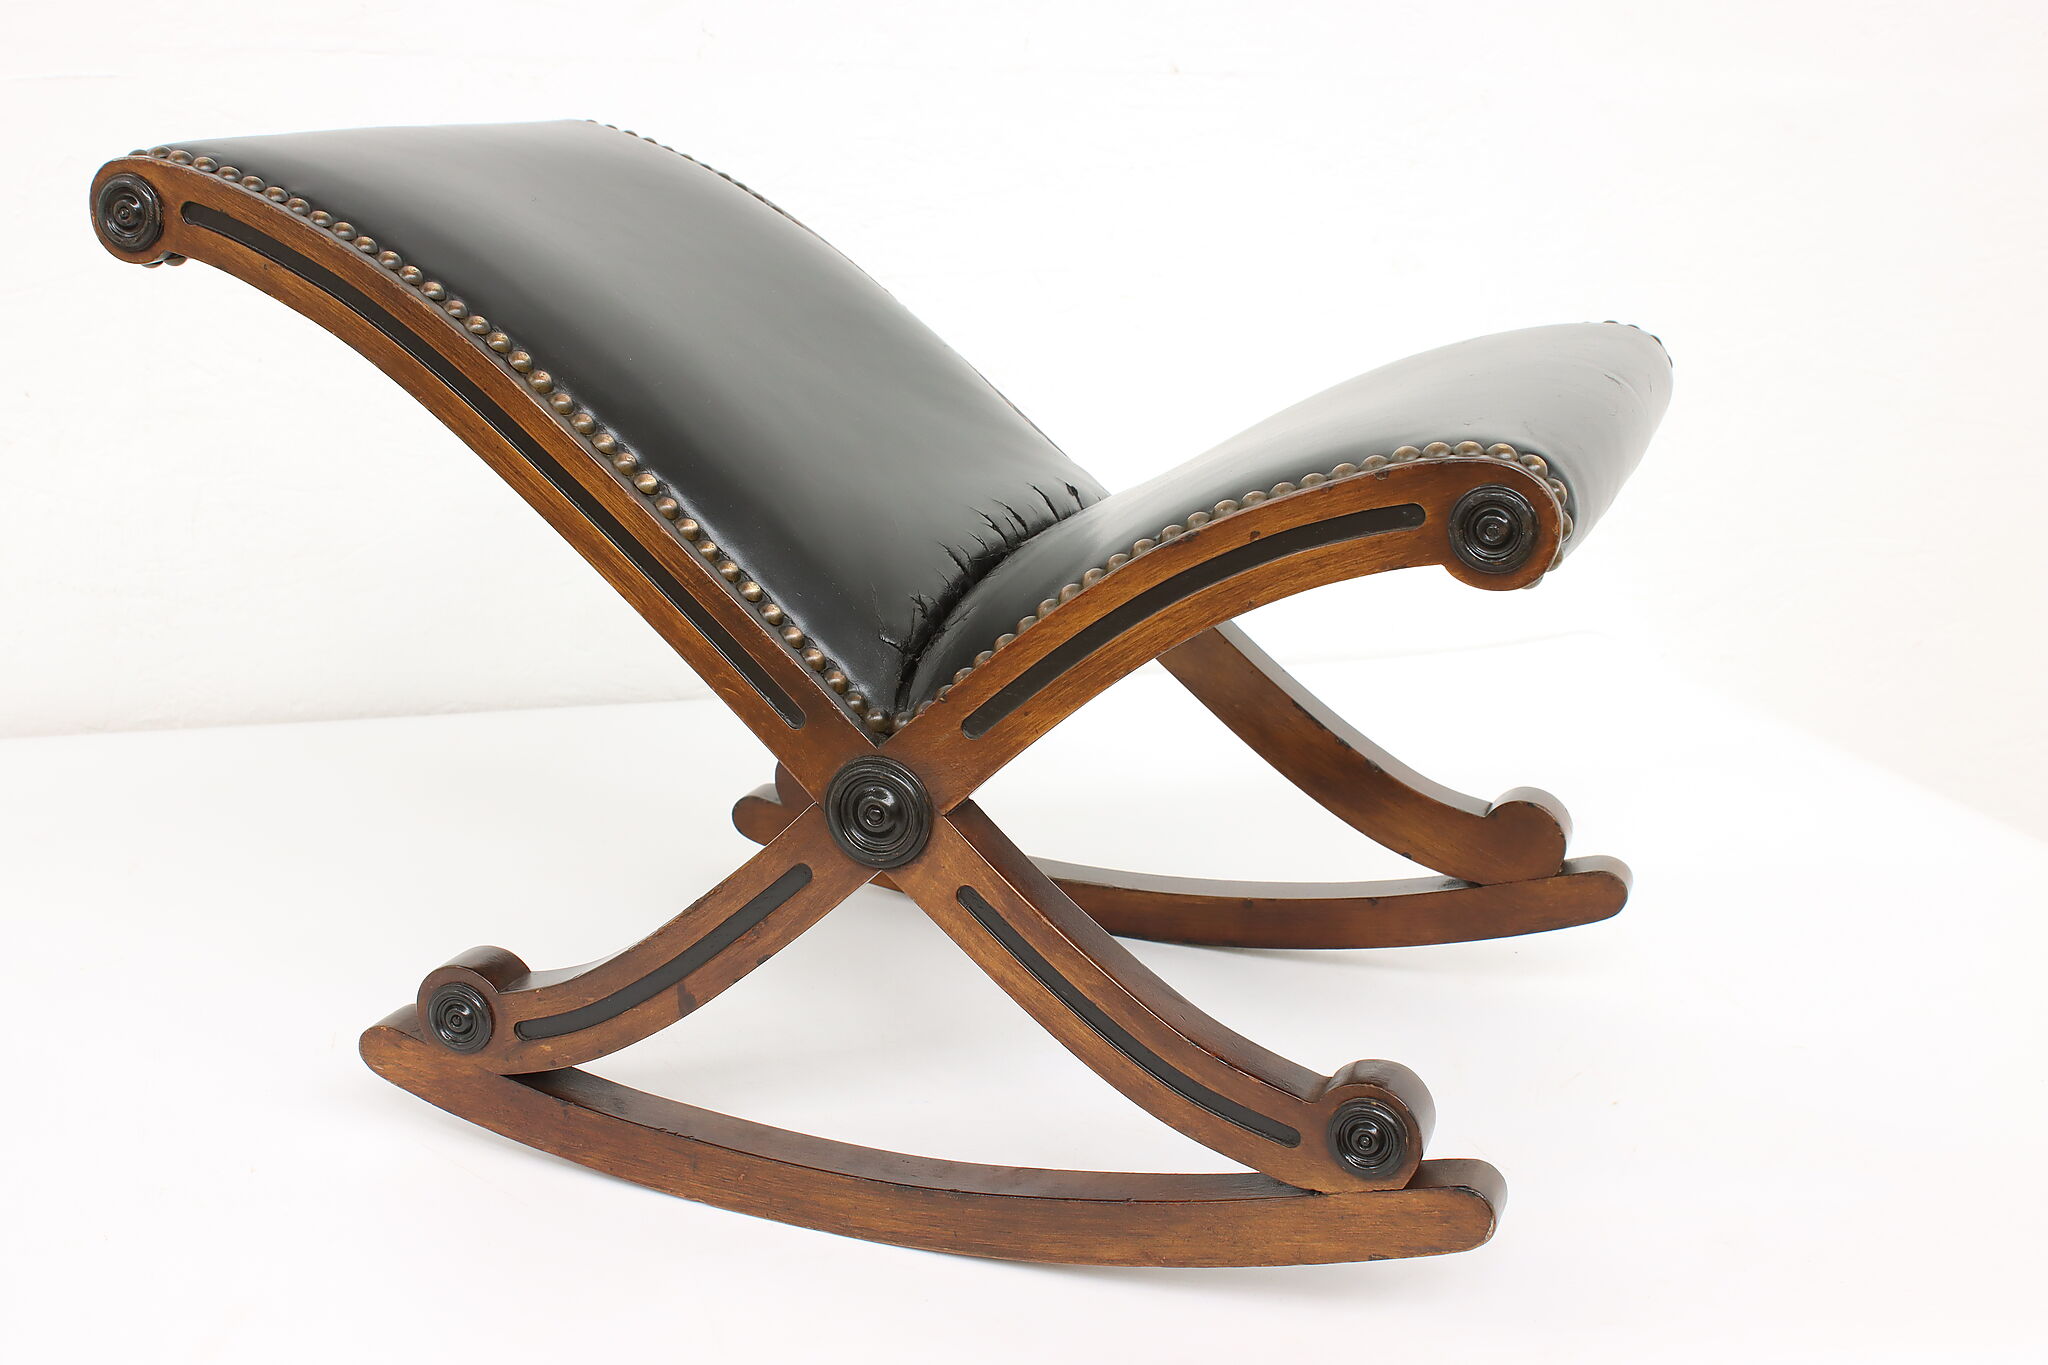 Victorian Antique Mahogany Gout Rocker Footstool, Recent Upholstery